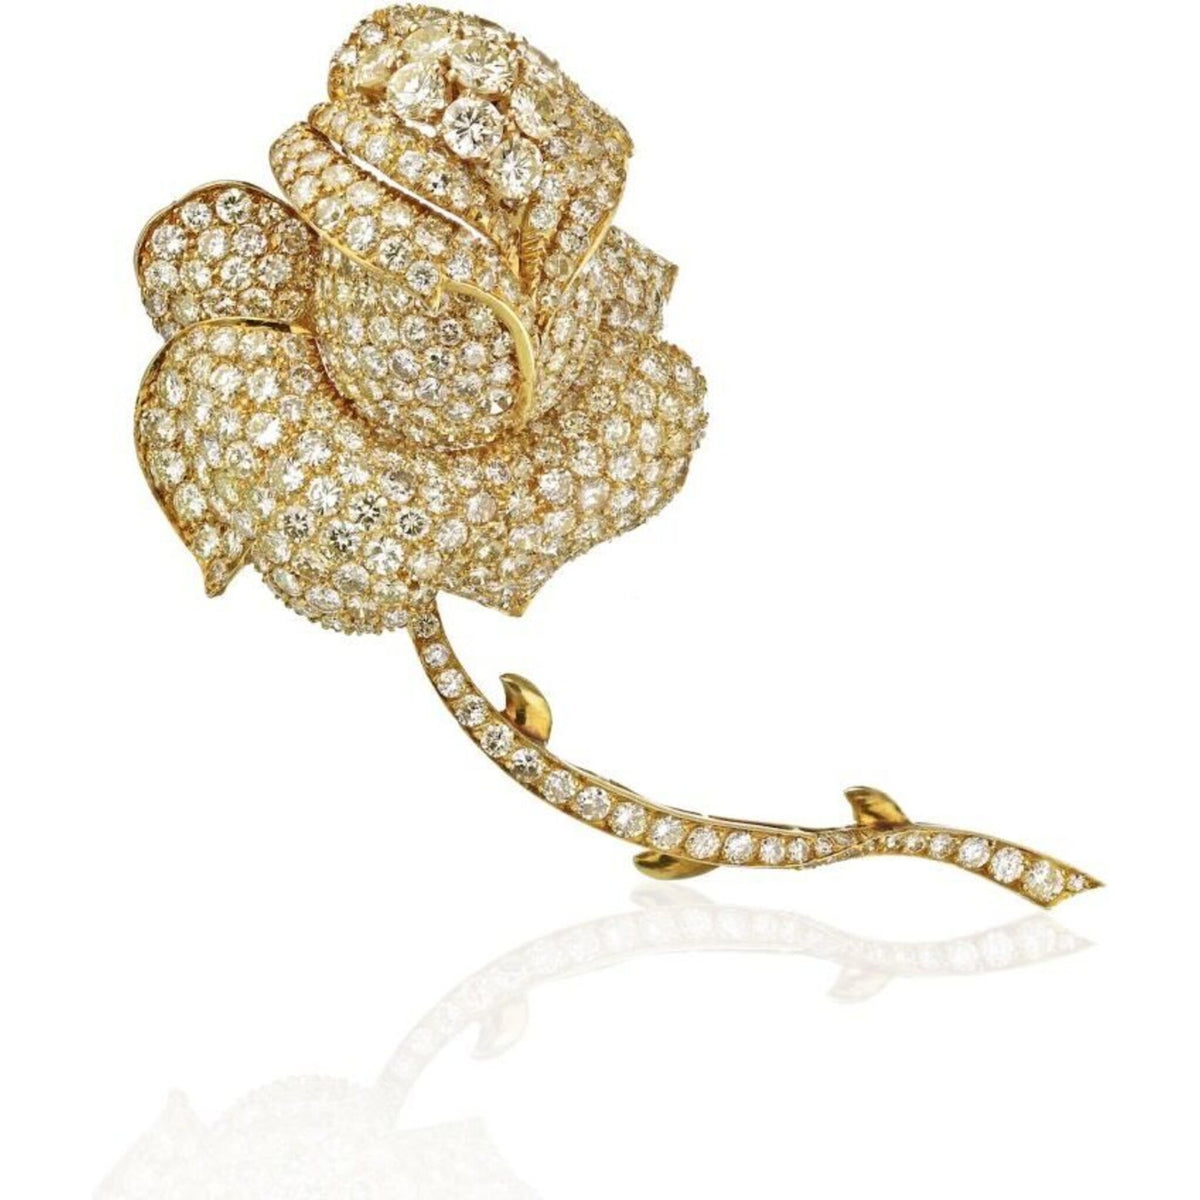 Tenenbaum Jewelers Tiffany and Co. 18K Gold and Diamond Flower Brooch